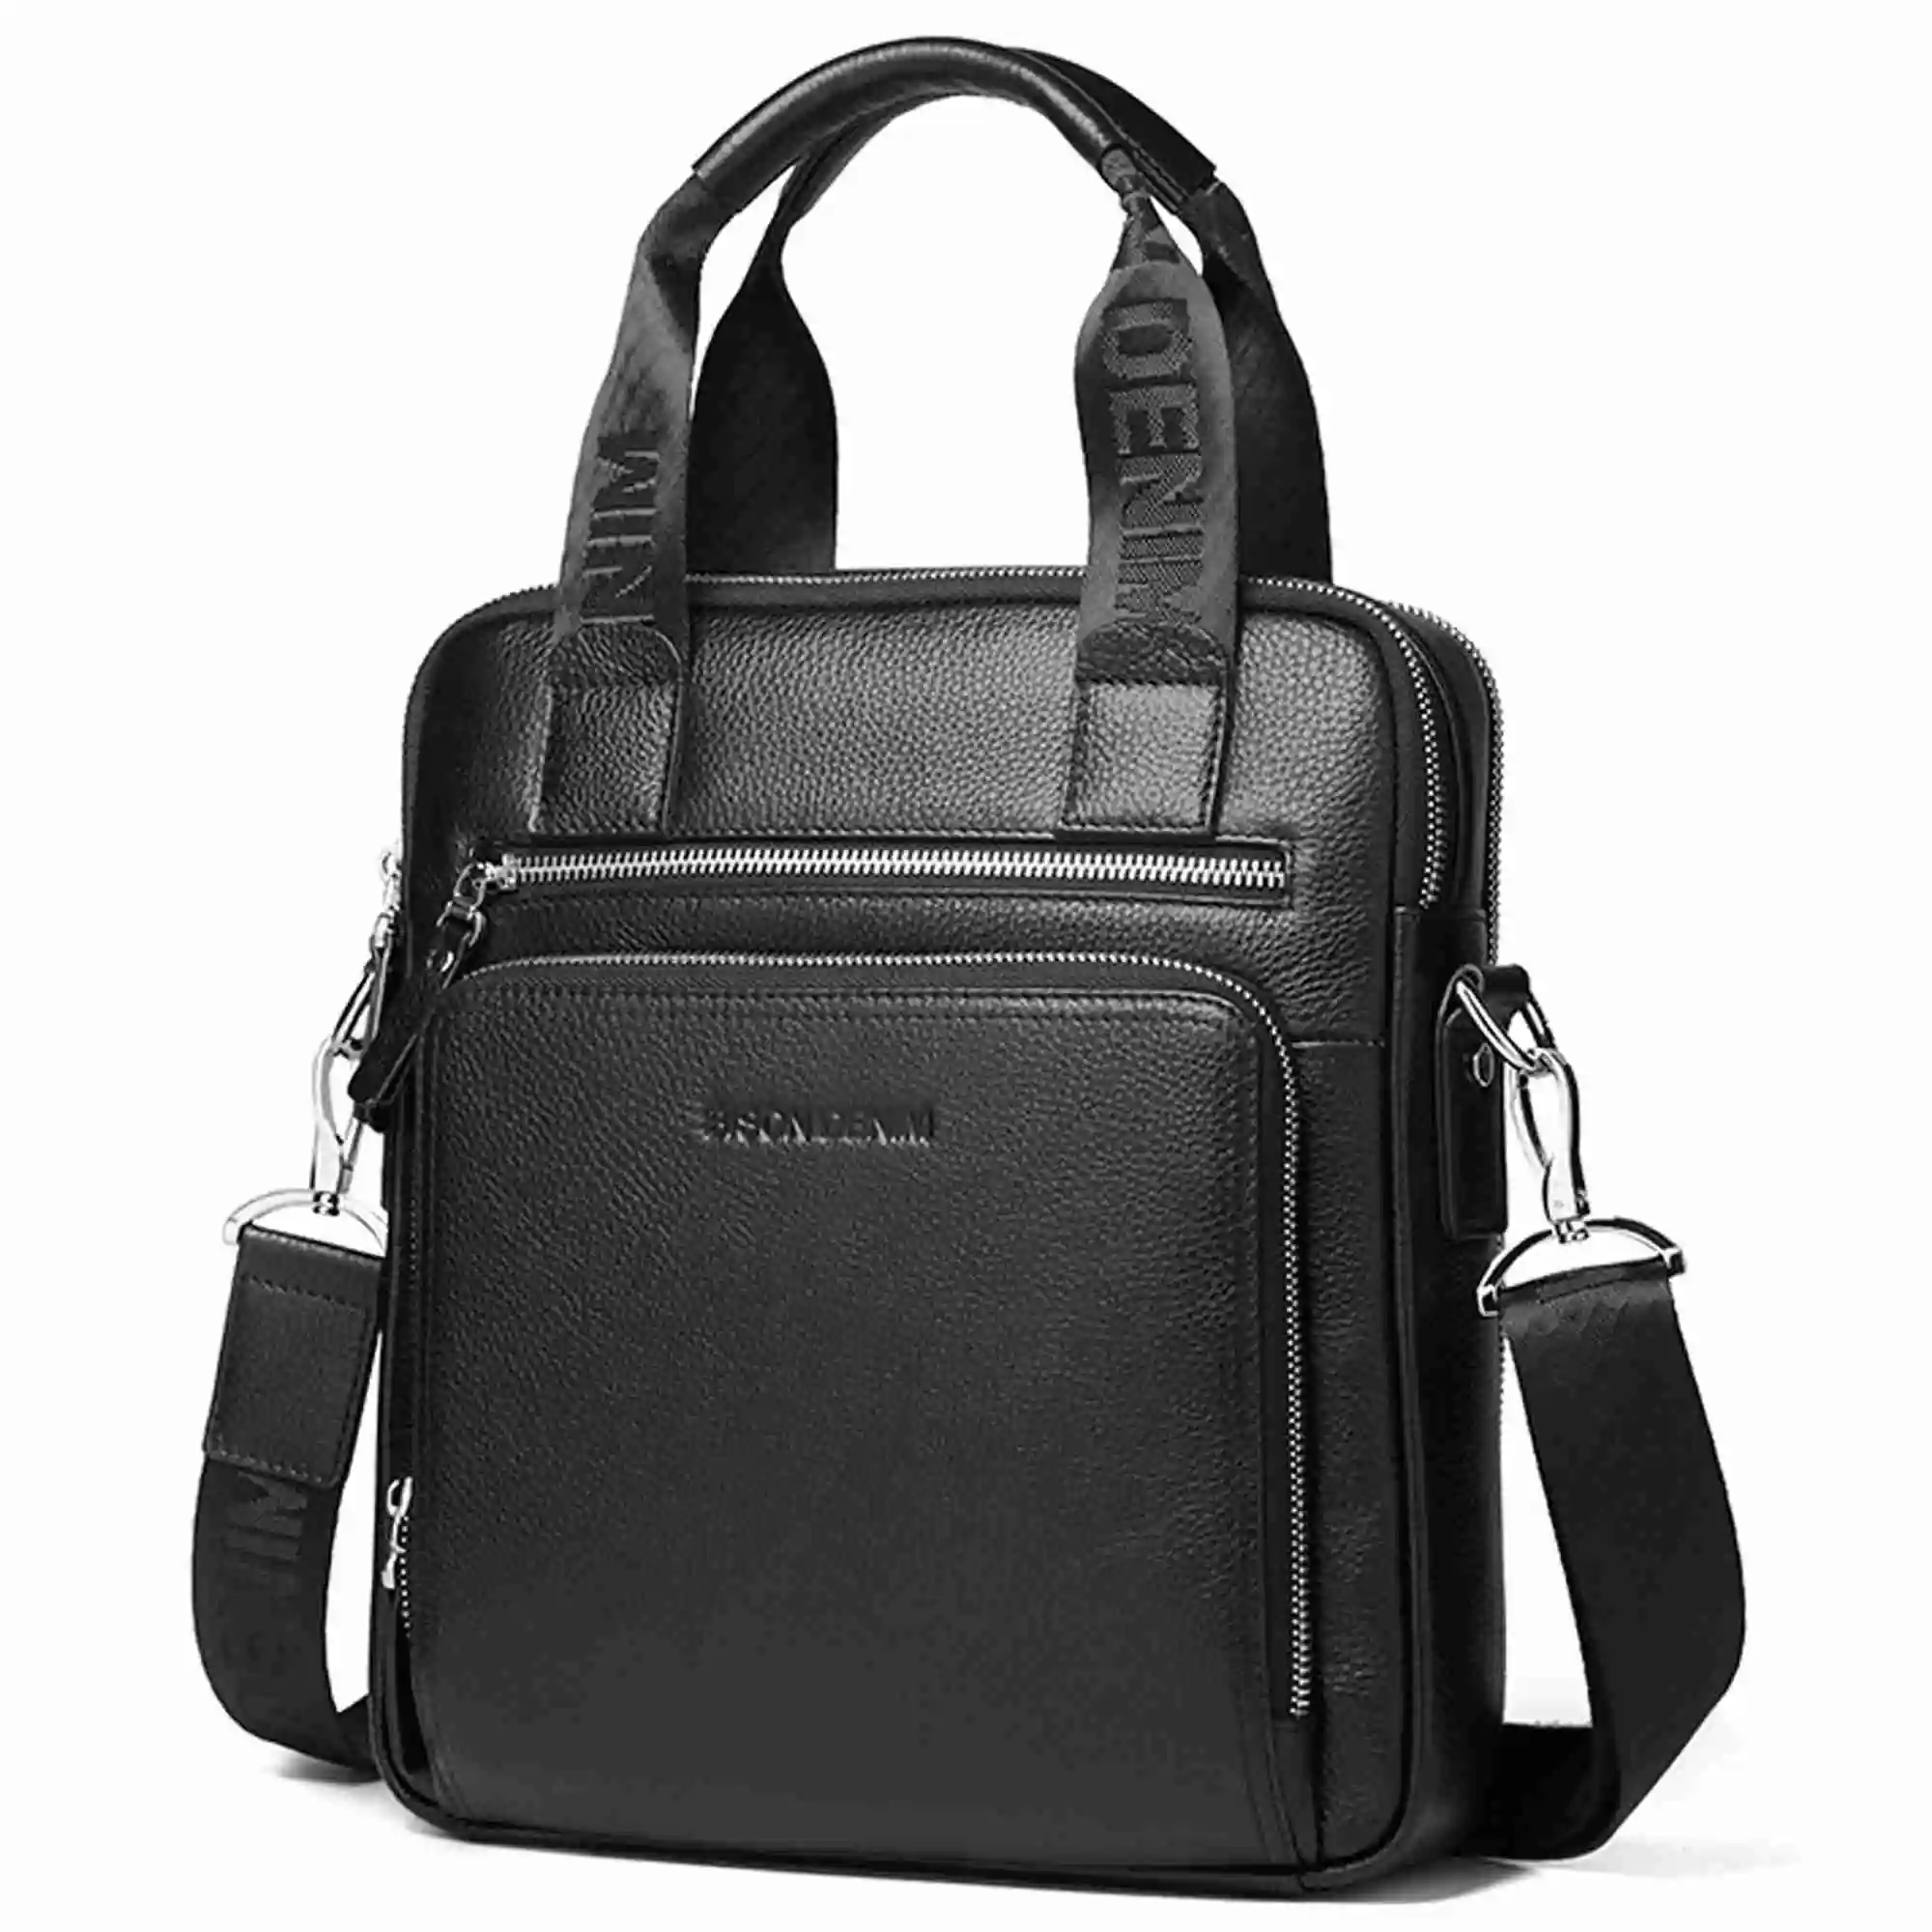 BISON DENIM Classic Black Male Bag Genuine Leather Business Crossbody Ba... - $247.85